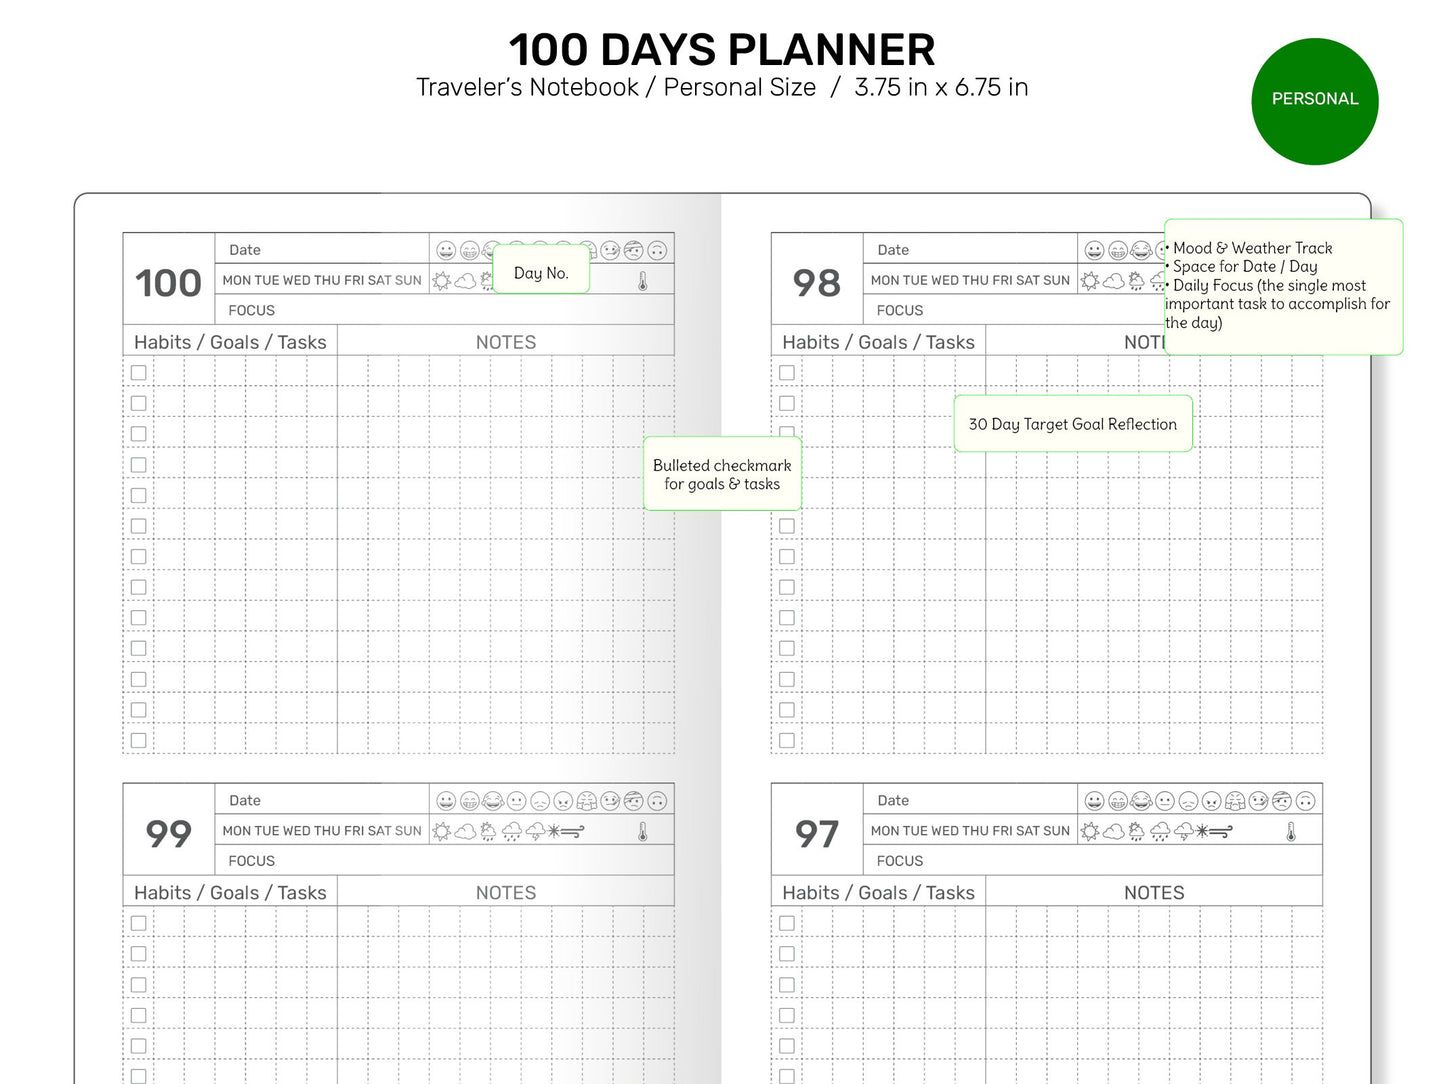 TN Personal 100 DAYS PLANNER Printable Traveler's Notebook Insert Refill